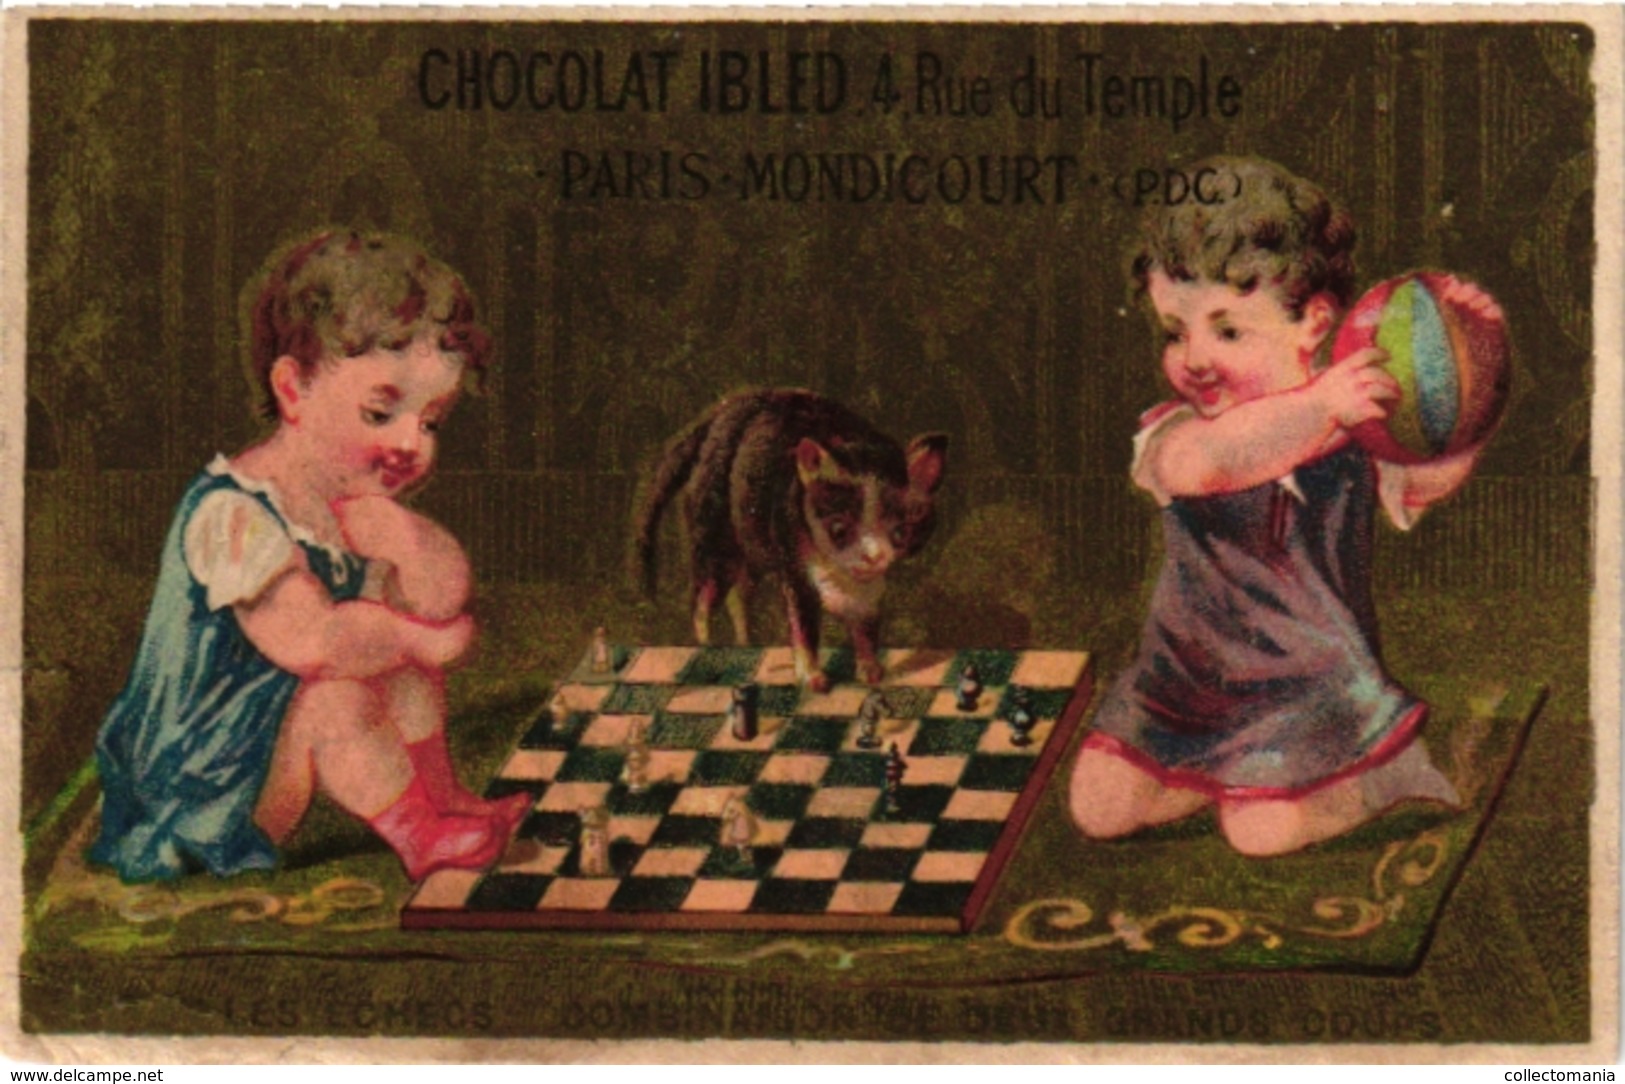 1 Trade Cards Chromo CHESS ECHEC SCHACH  Pub Chocolat  IBLED Mondicourt - Schaken